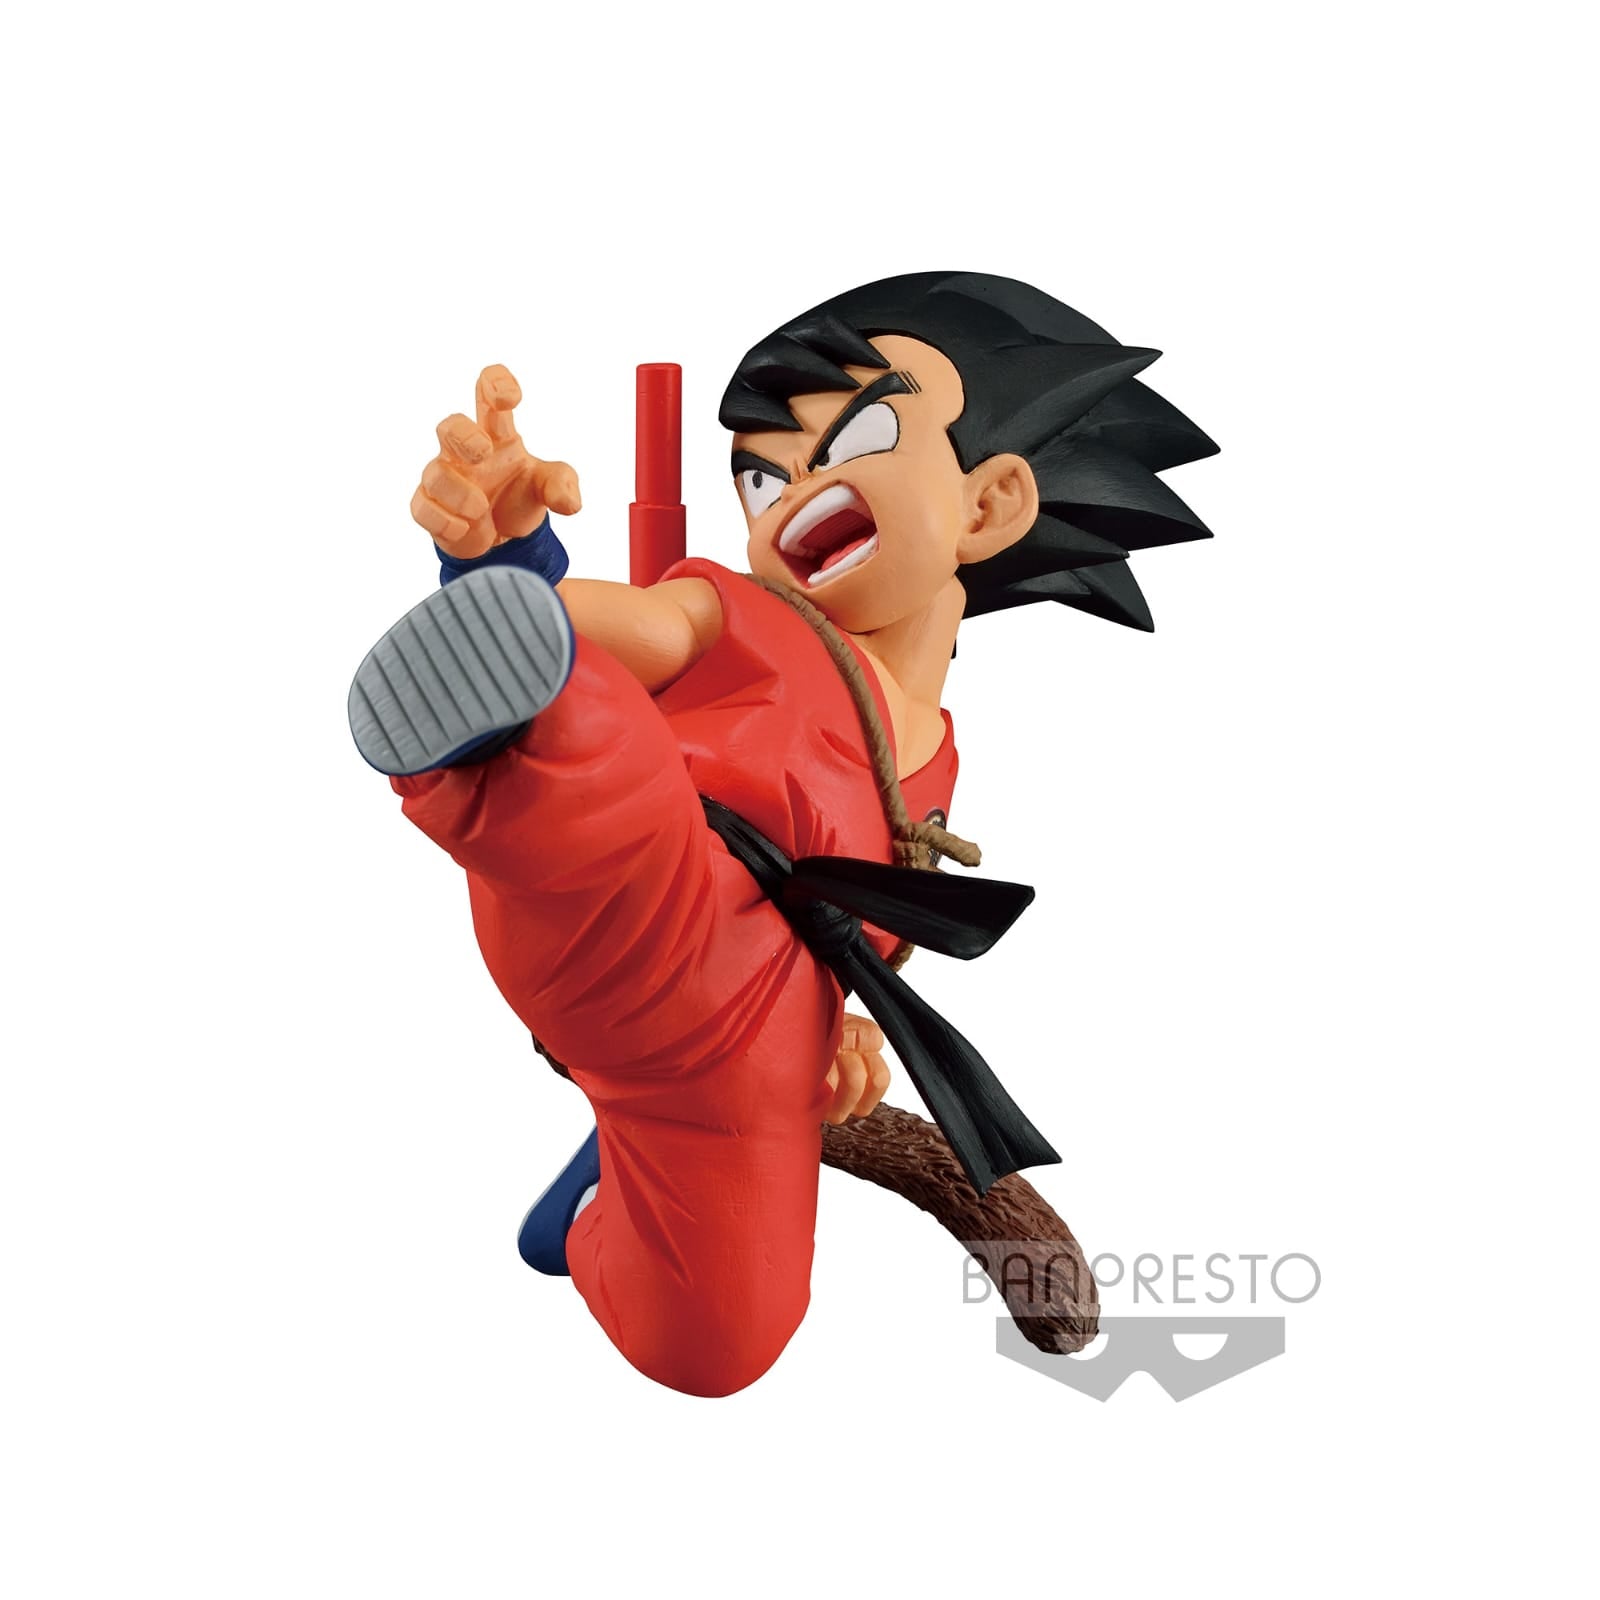 Banpresto Dragon Ball Match Makers - Son Goku Childhood